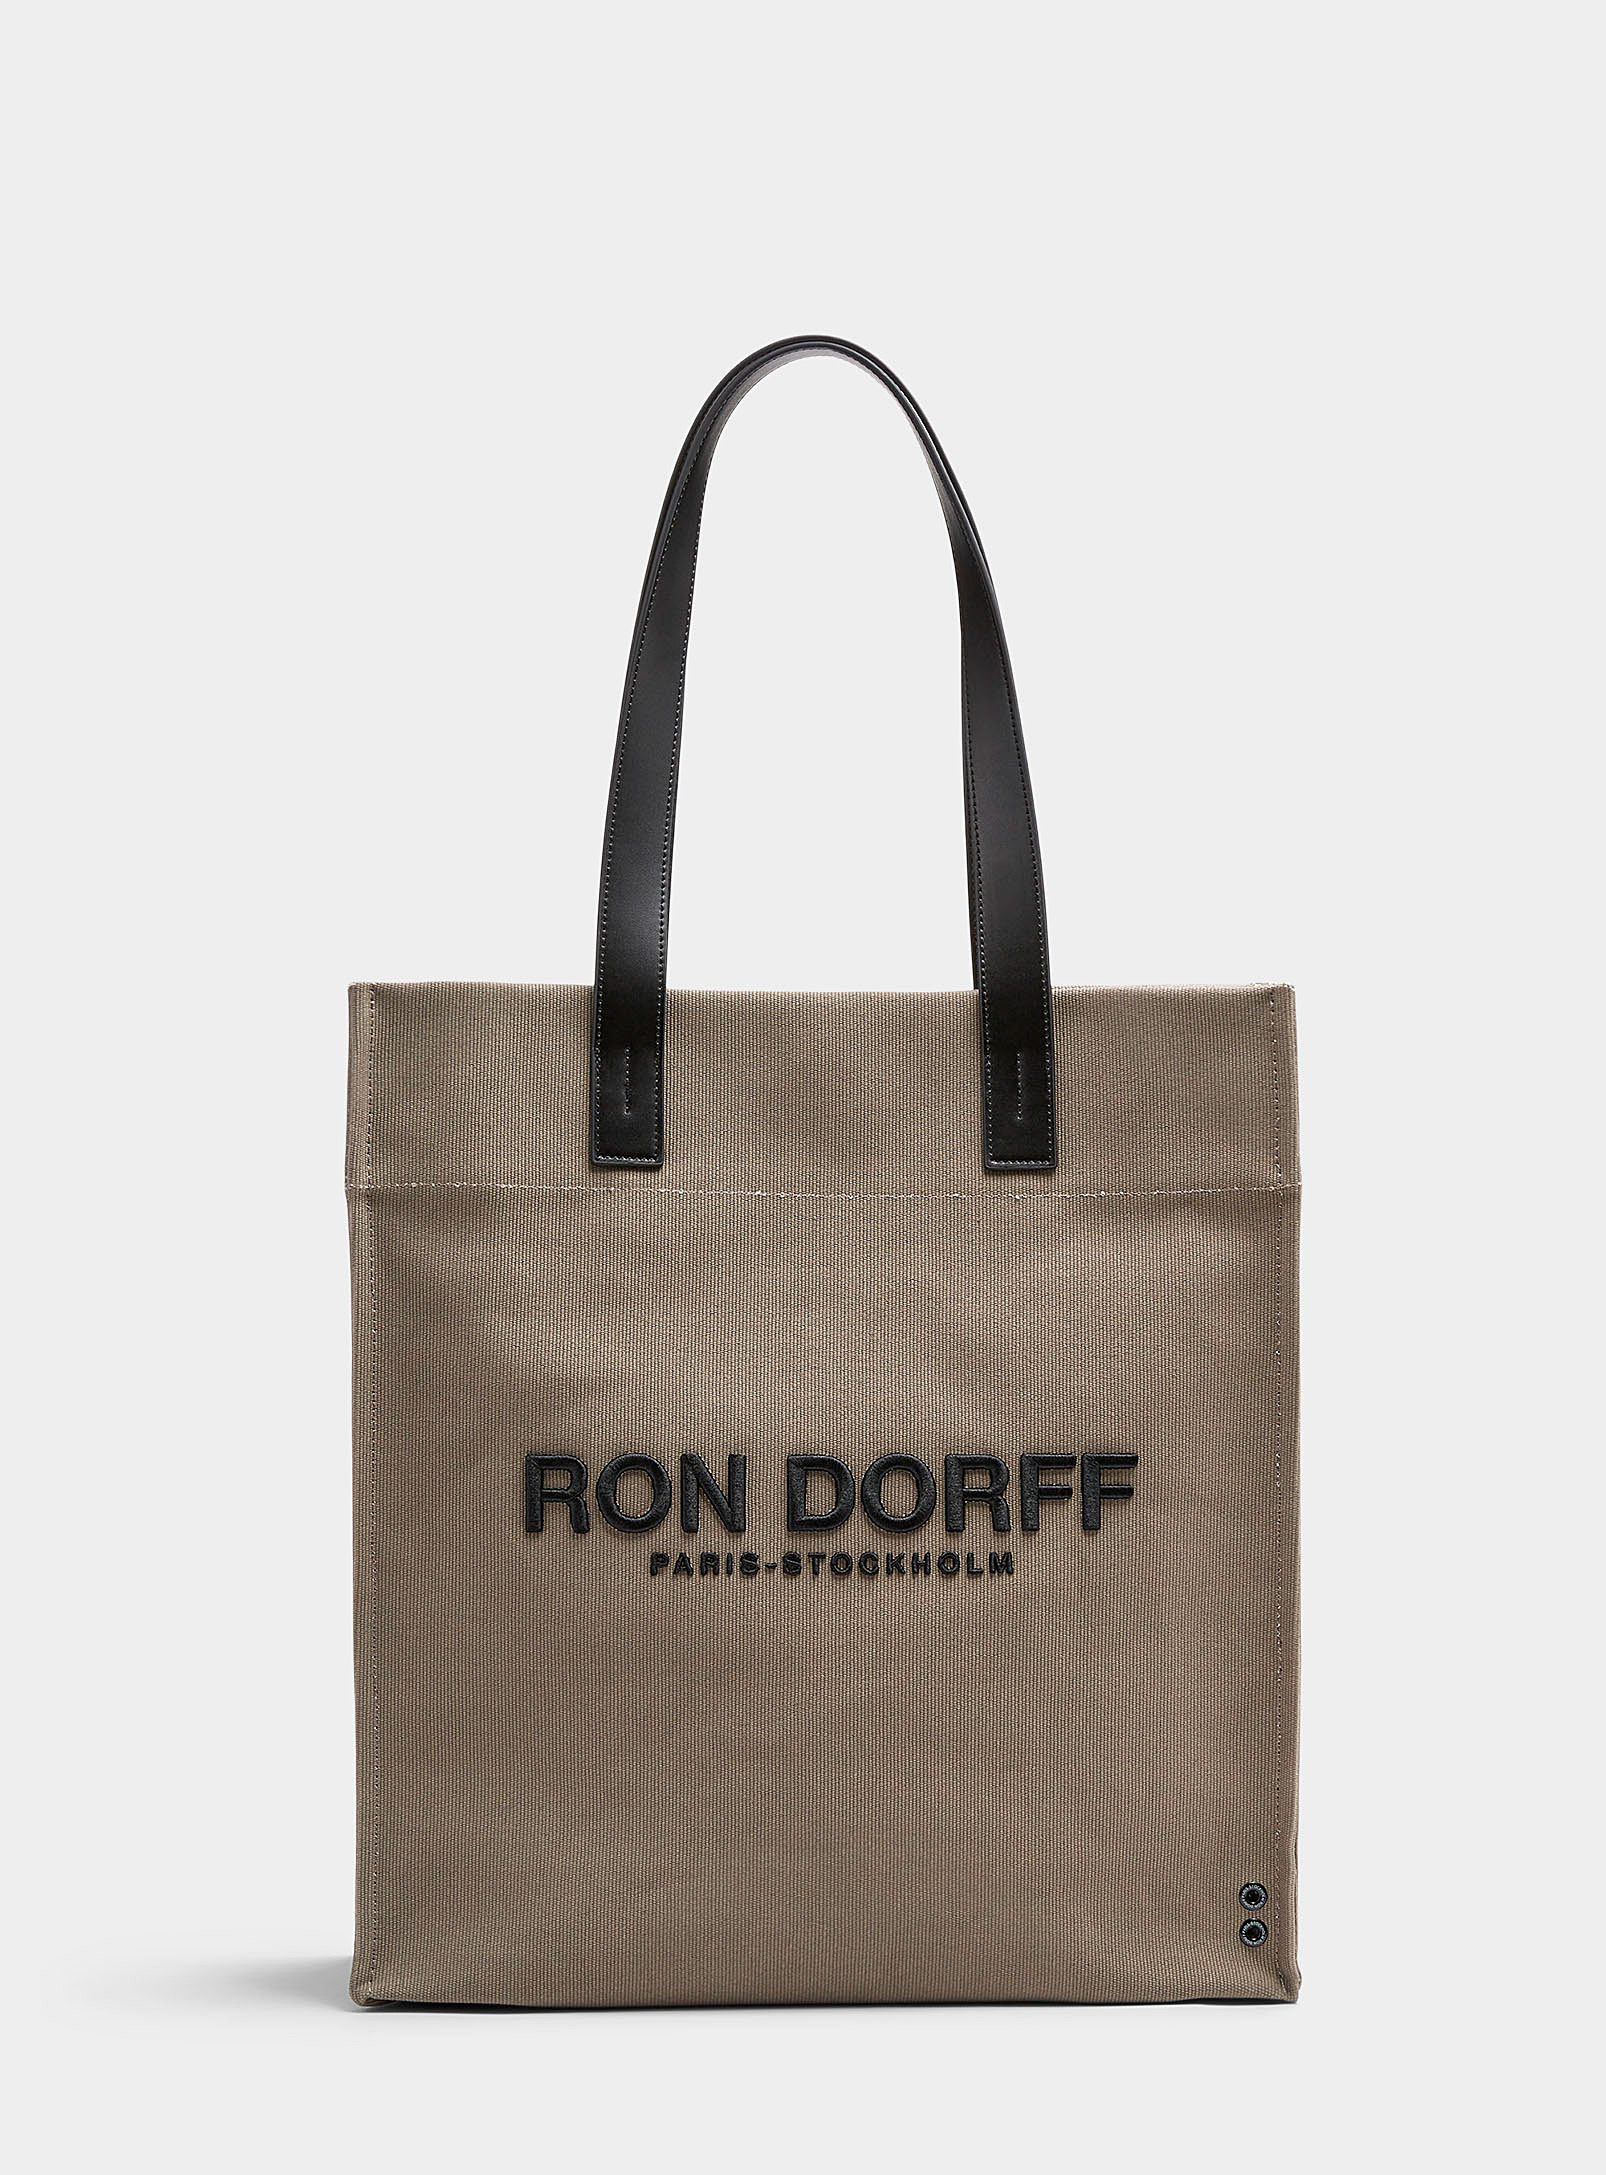 Ron Dorff - Le sac fourre-tout City